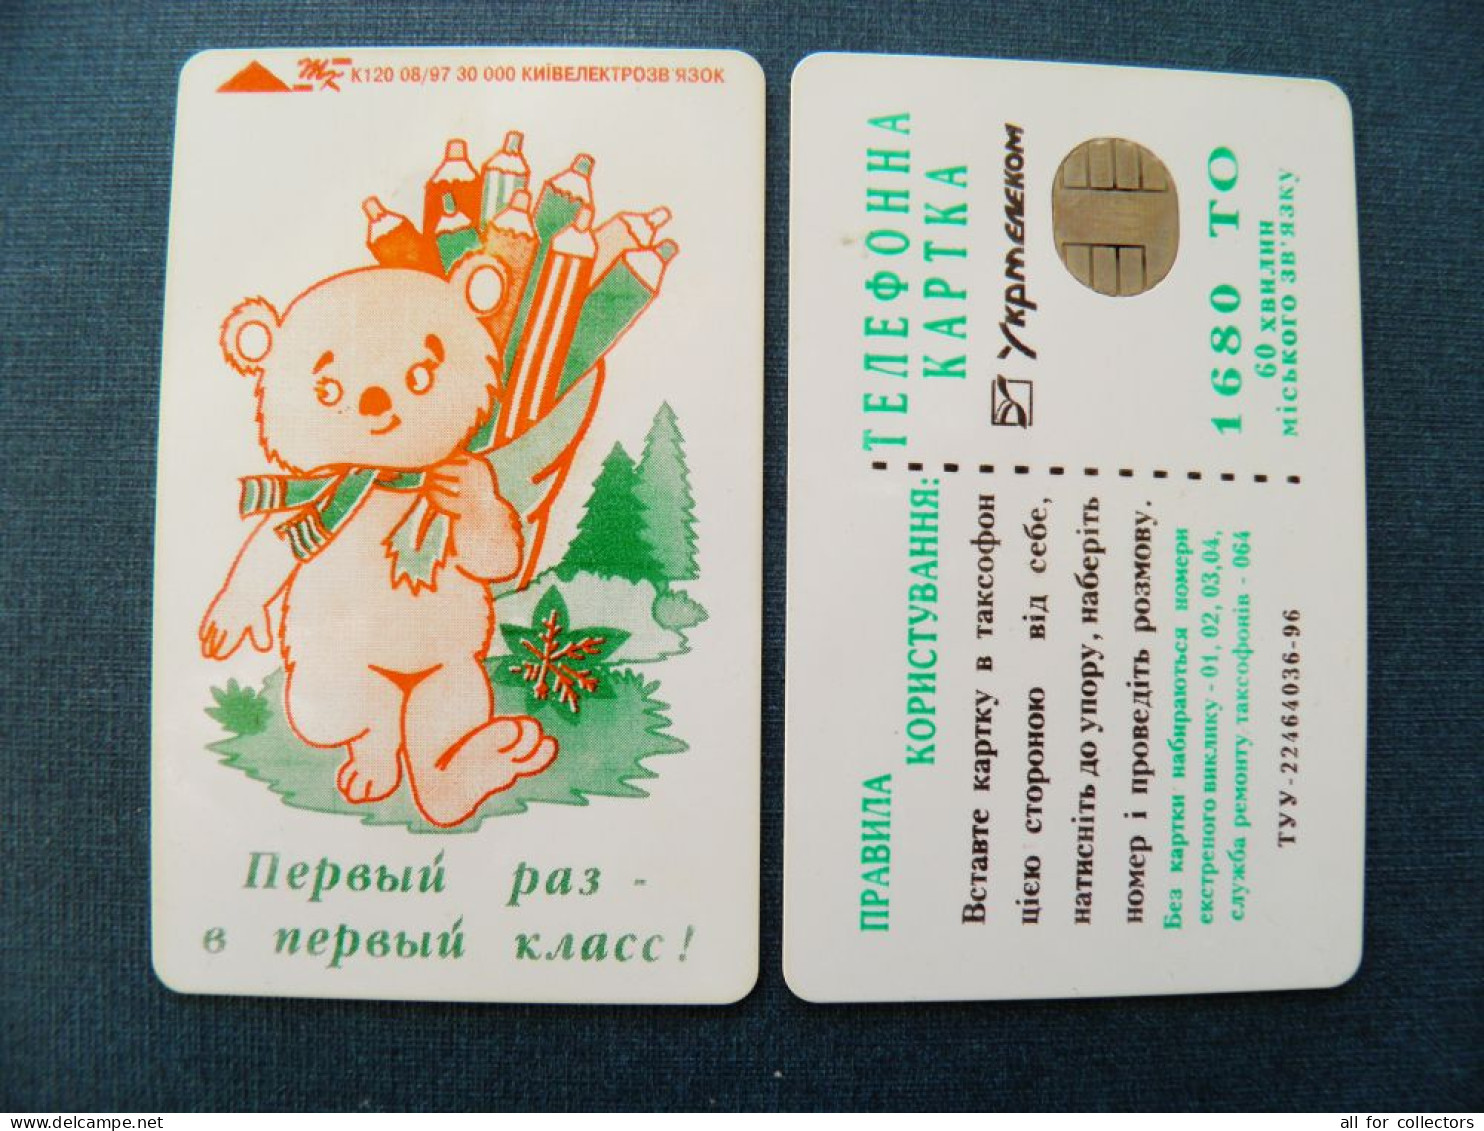 Phonecard Chip 1st Class September School Teddy Bear K120 08/97 30,000ex. 1680 Units UKRAINE - Ukraine